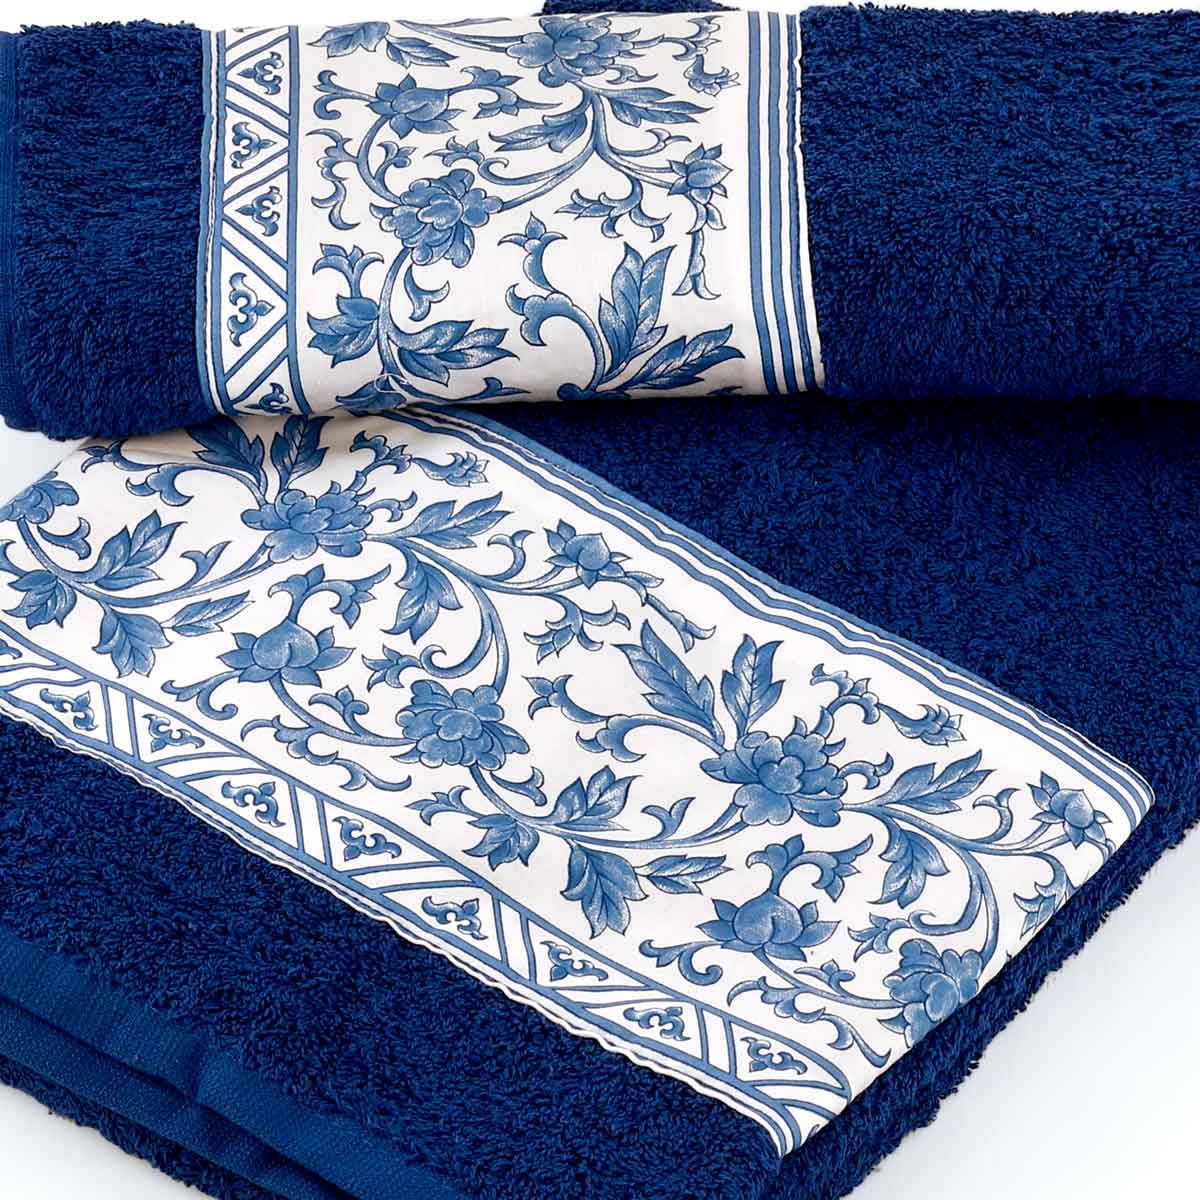 Asciugamani in spugna blu con balza in raso di cotone fantasia a fiori